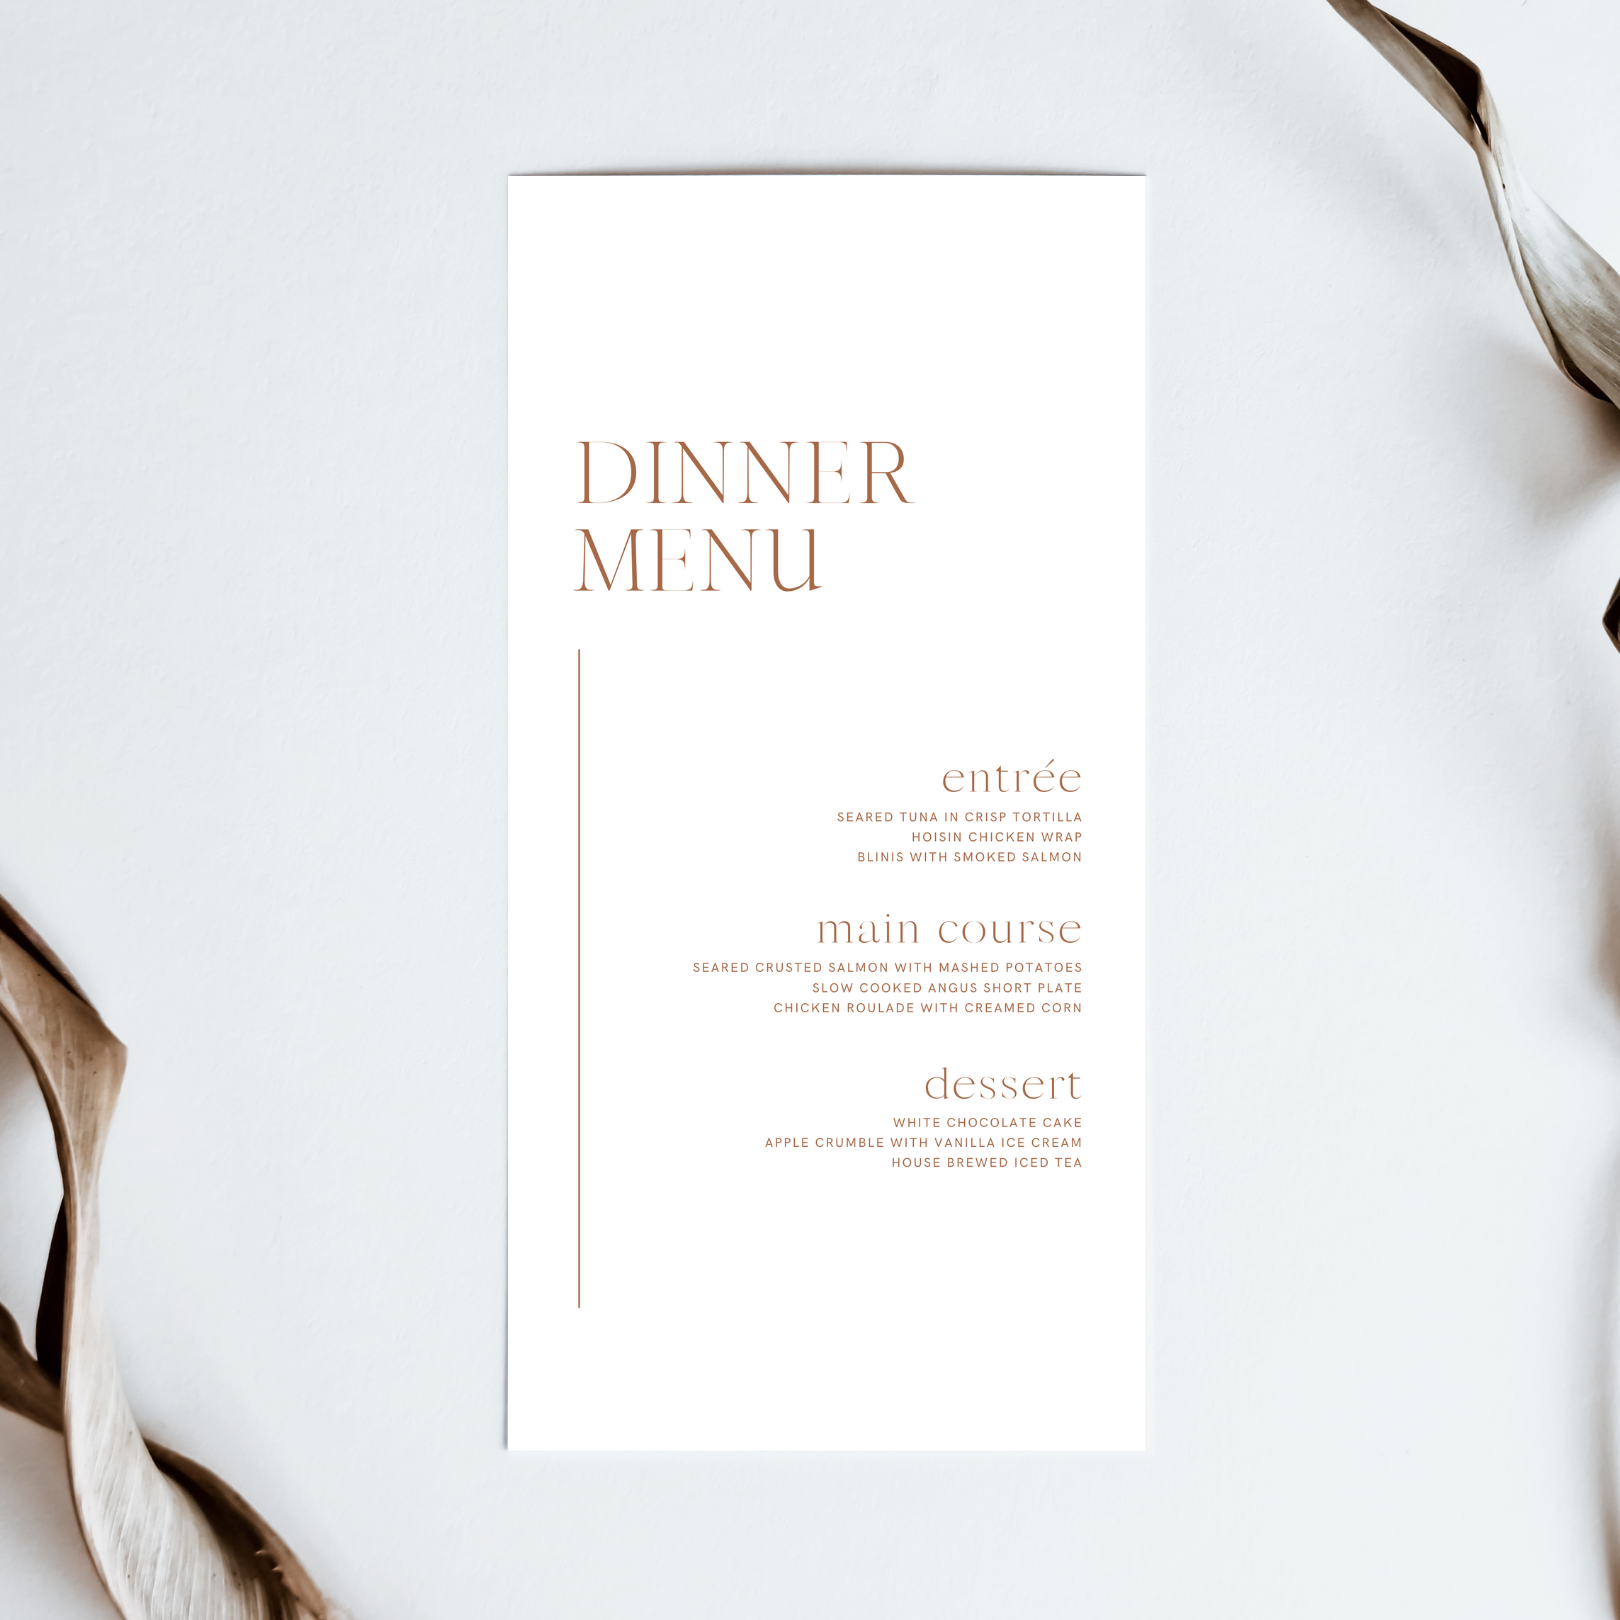 A minimalist, white wedding menu lays on an off-white background. 